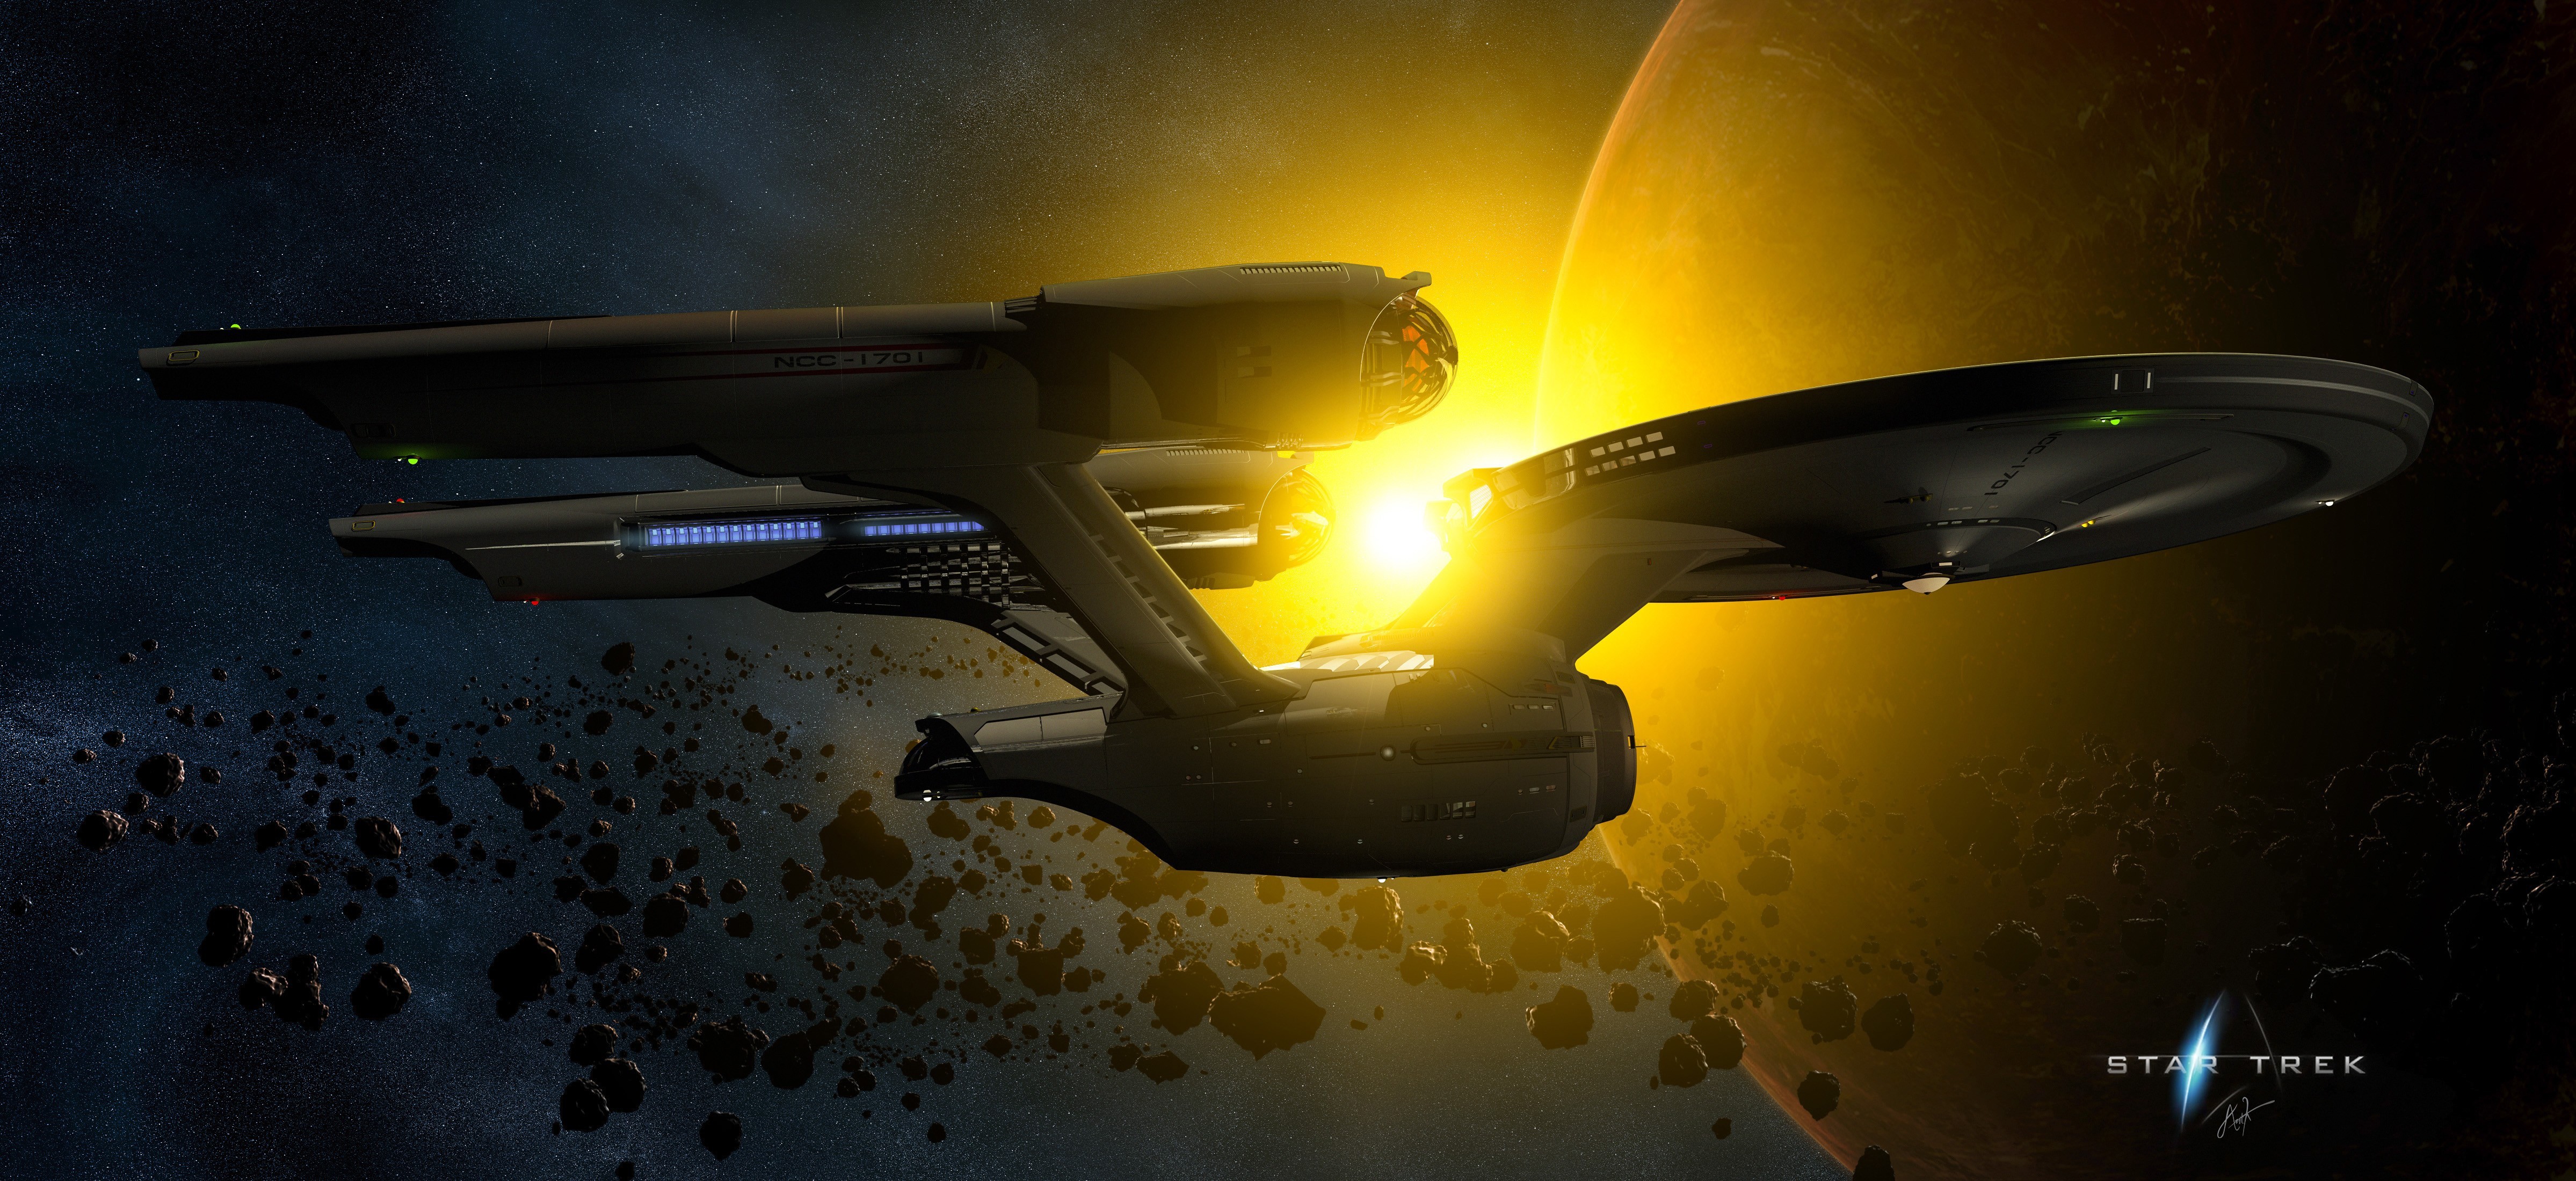 Star Trek Spaceship Asteroid Sun Planet Uss Enterprise Spaceship Wallpapers Hd Desktop